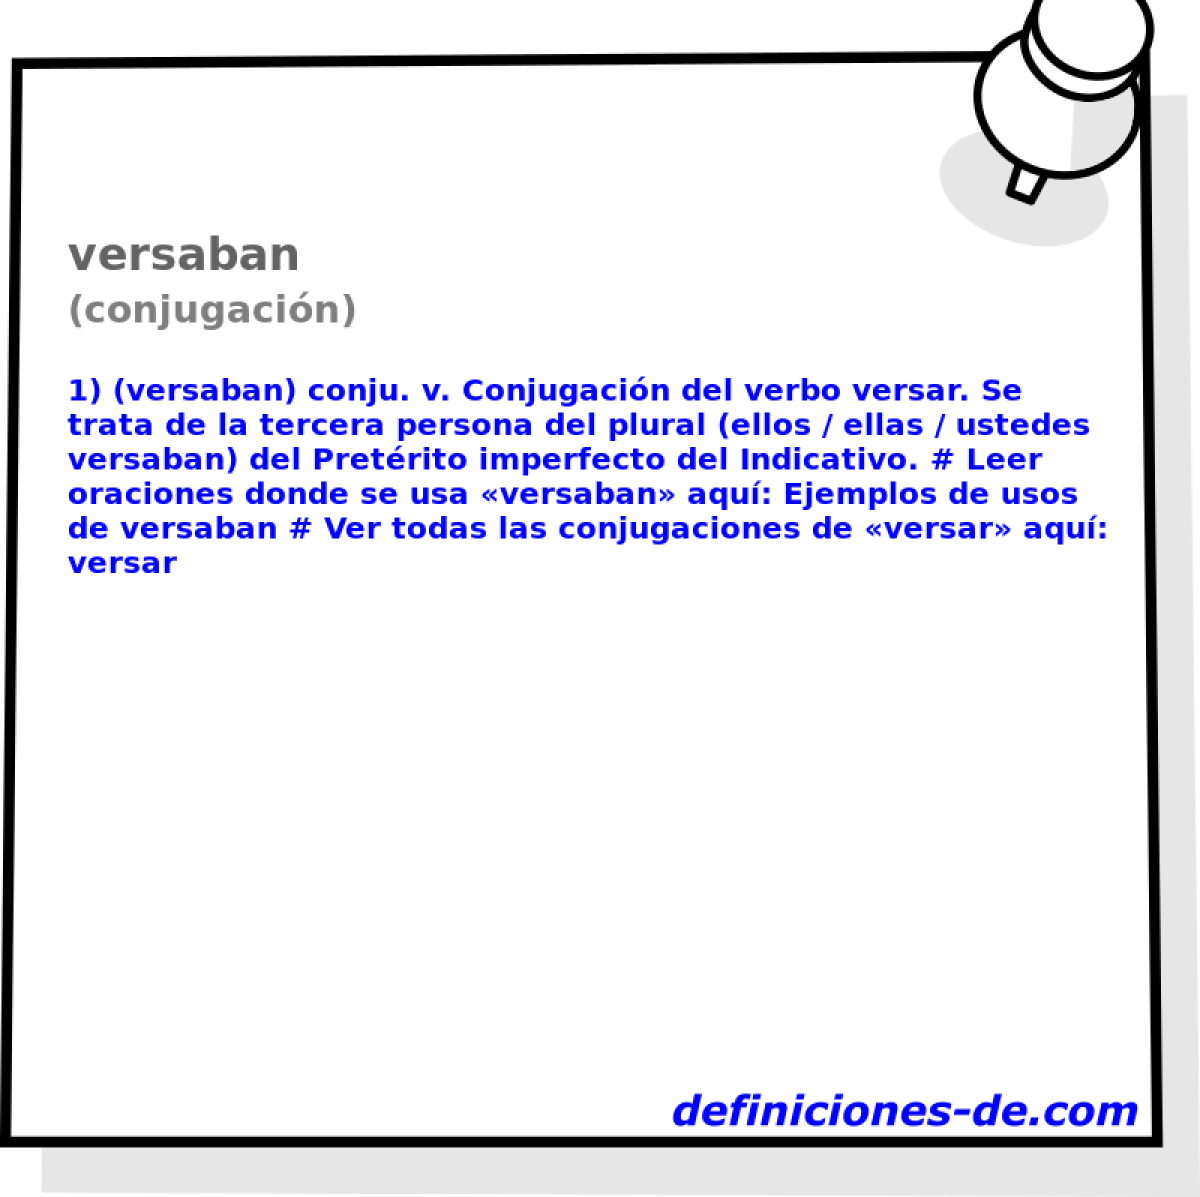 versaban (conjugacin)